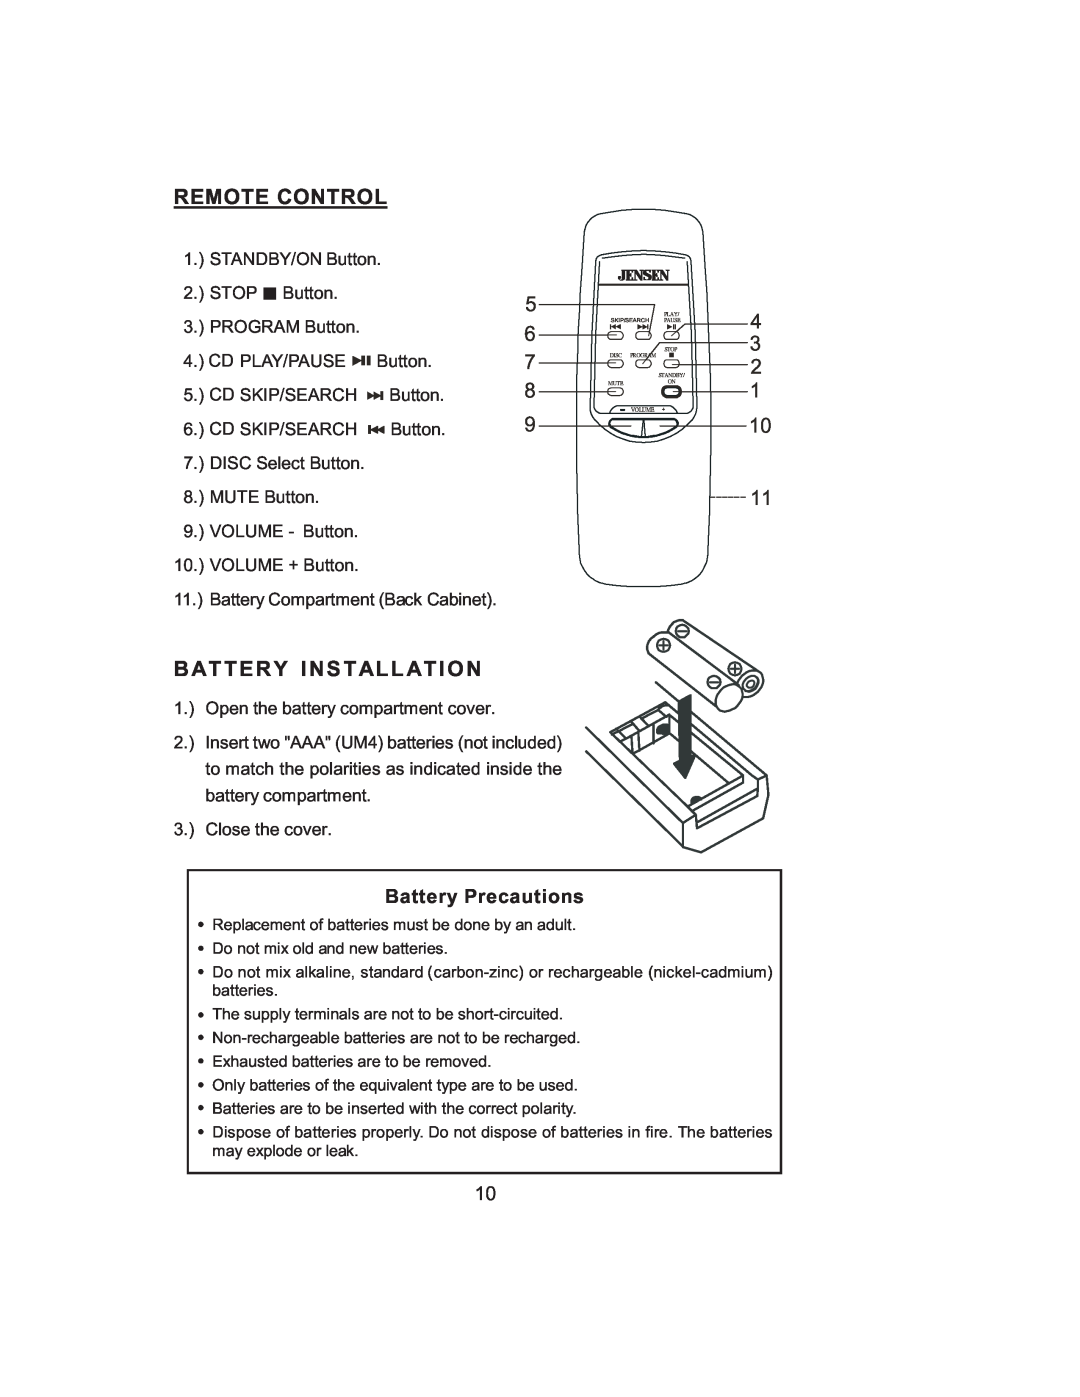 Jensen JMC-1000 manual Remote Control, B A T T E R Y I N S T A L L A T I O N, Battery Precautions, 4 3 2 